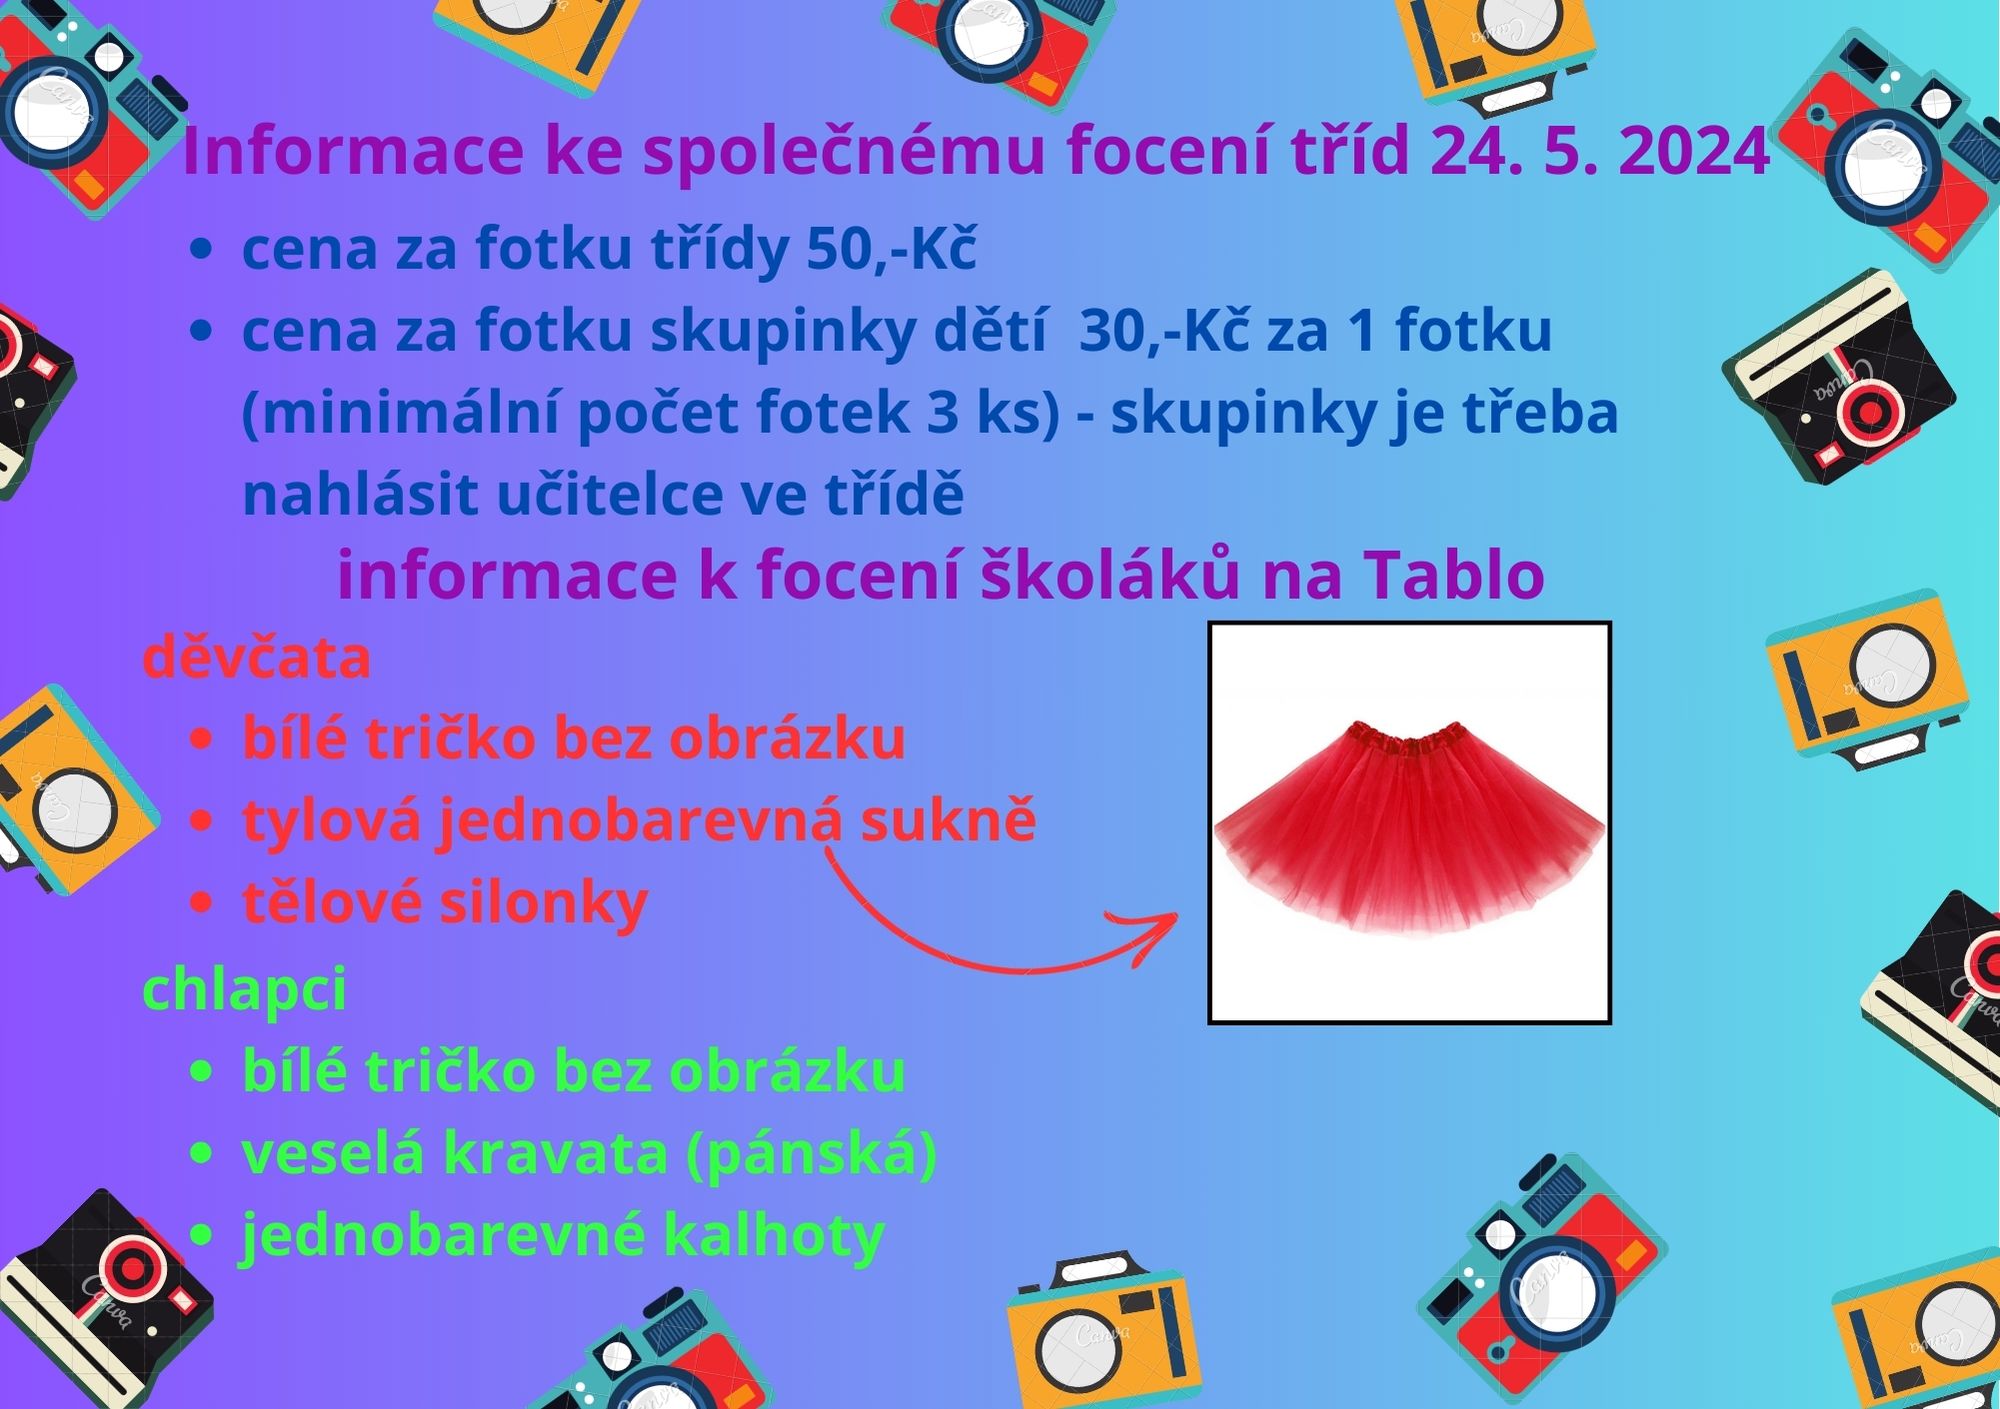 informace_ke_spolecnemu_foceni_trid_a_tablo_zmena.jpg (276 KB)